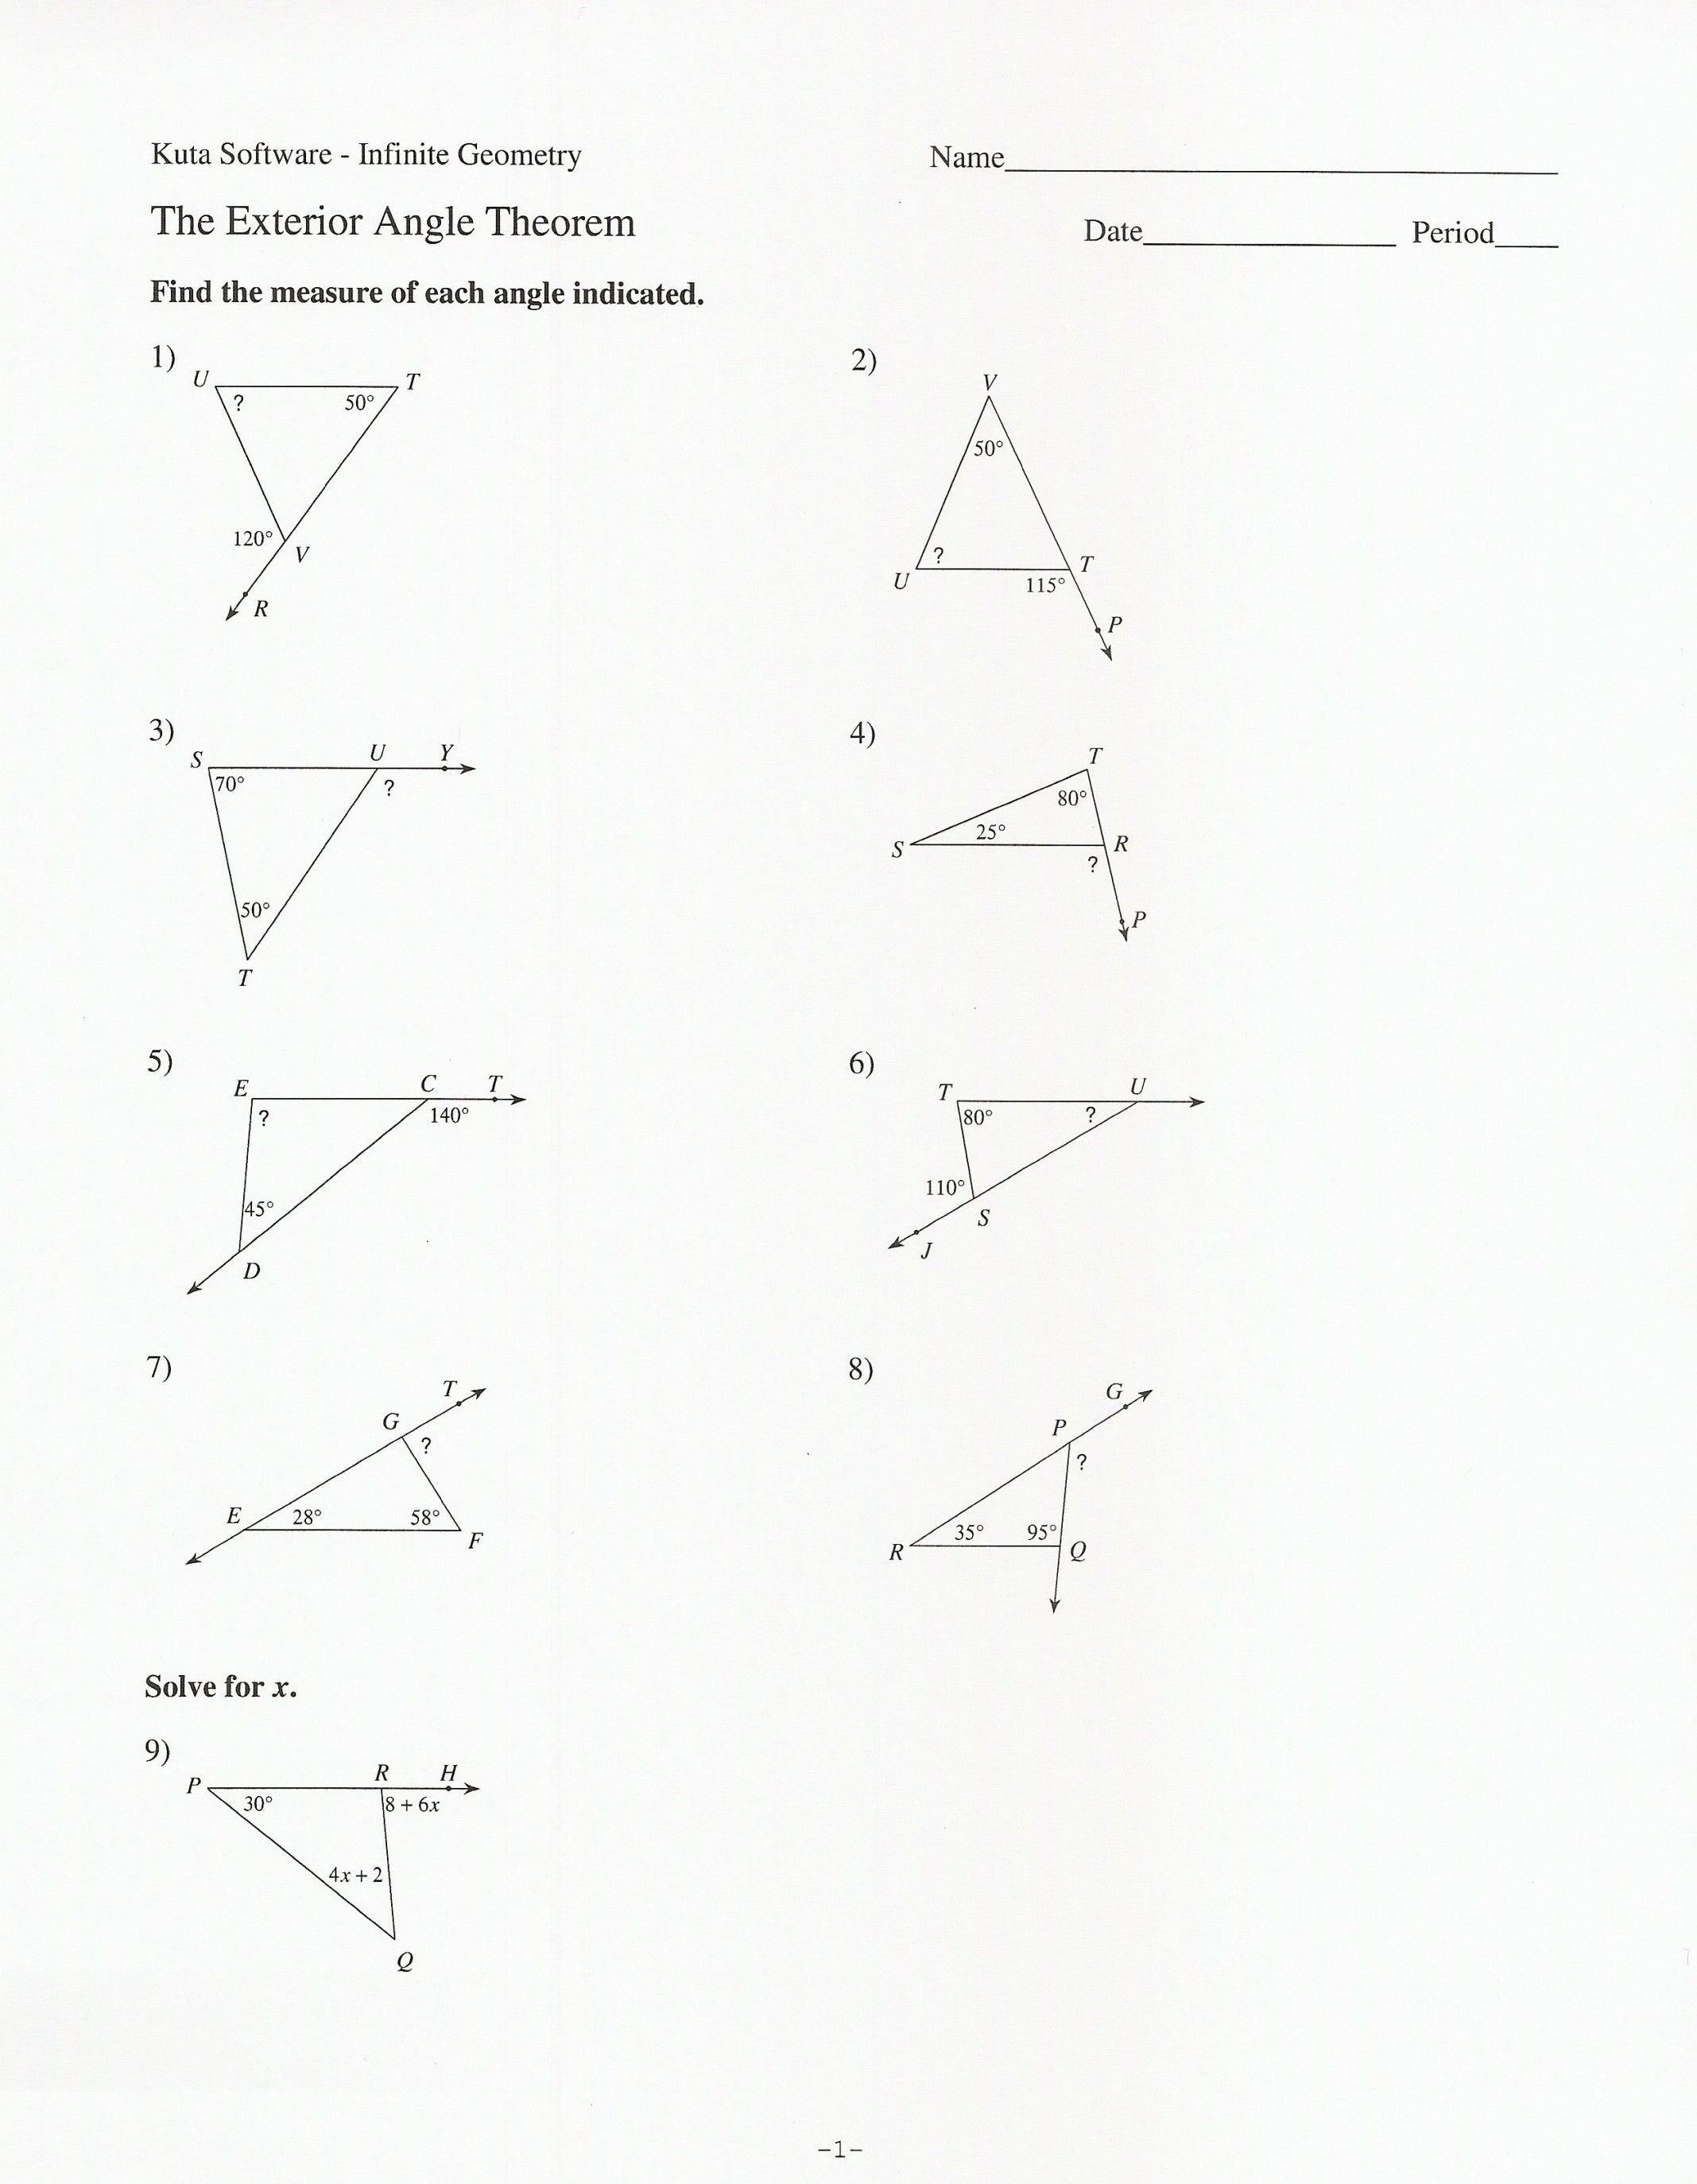 Triangle Angle Sum Theorem C Triangle Sum And Exterior Angle Theorem For Triangle Angle Sum Worksheet Answer Key